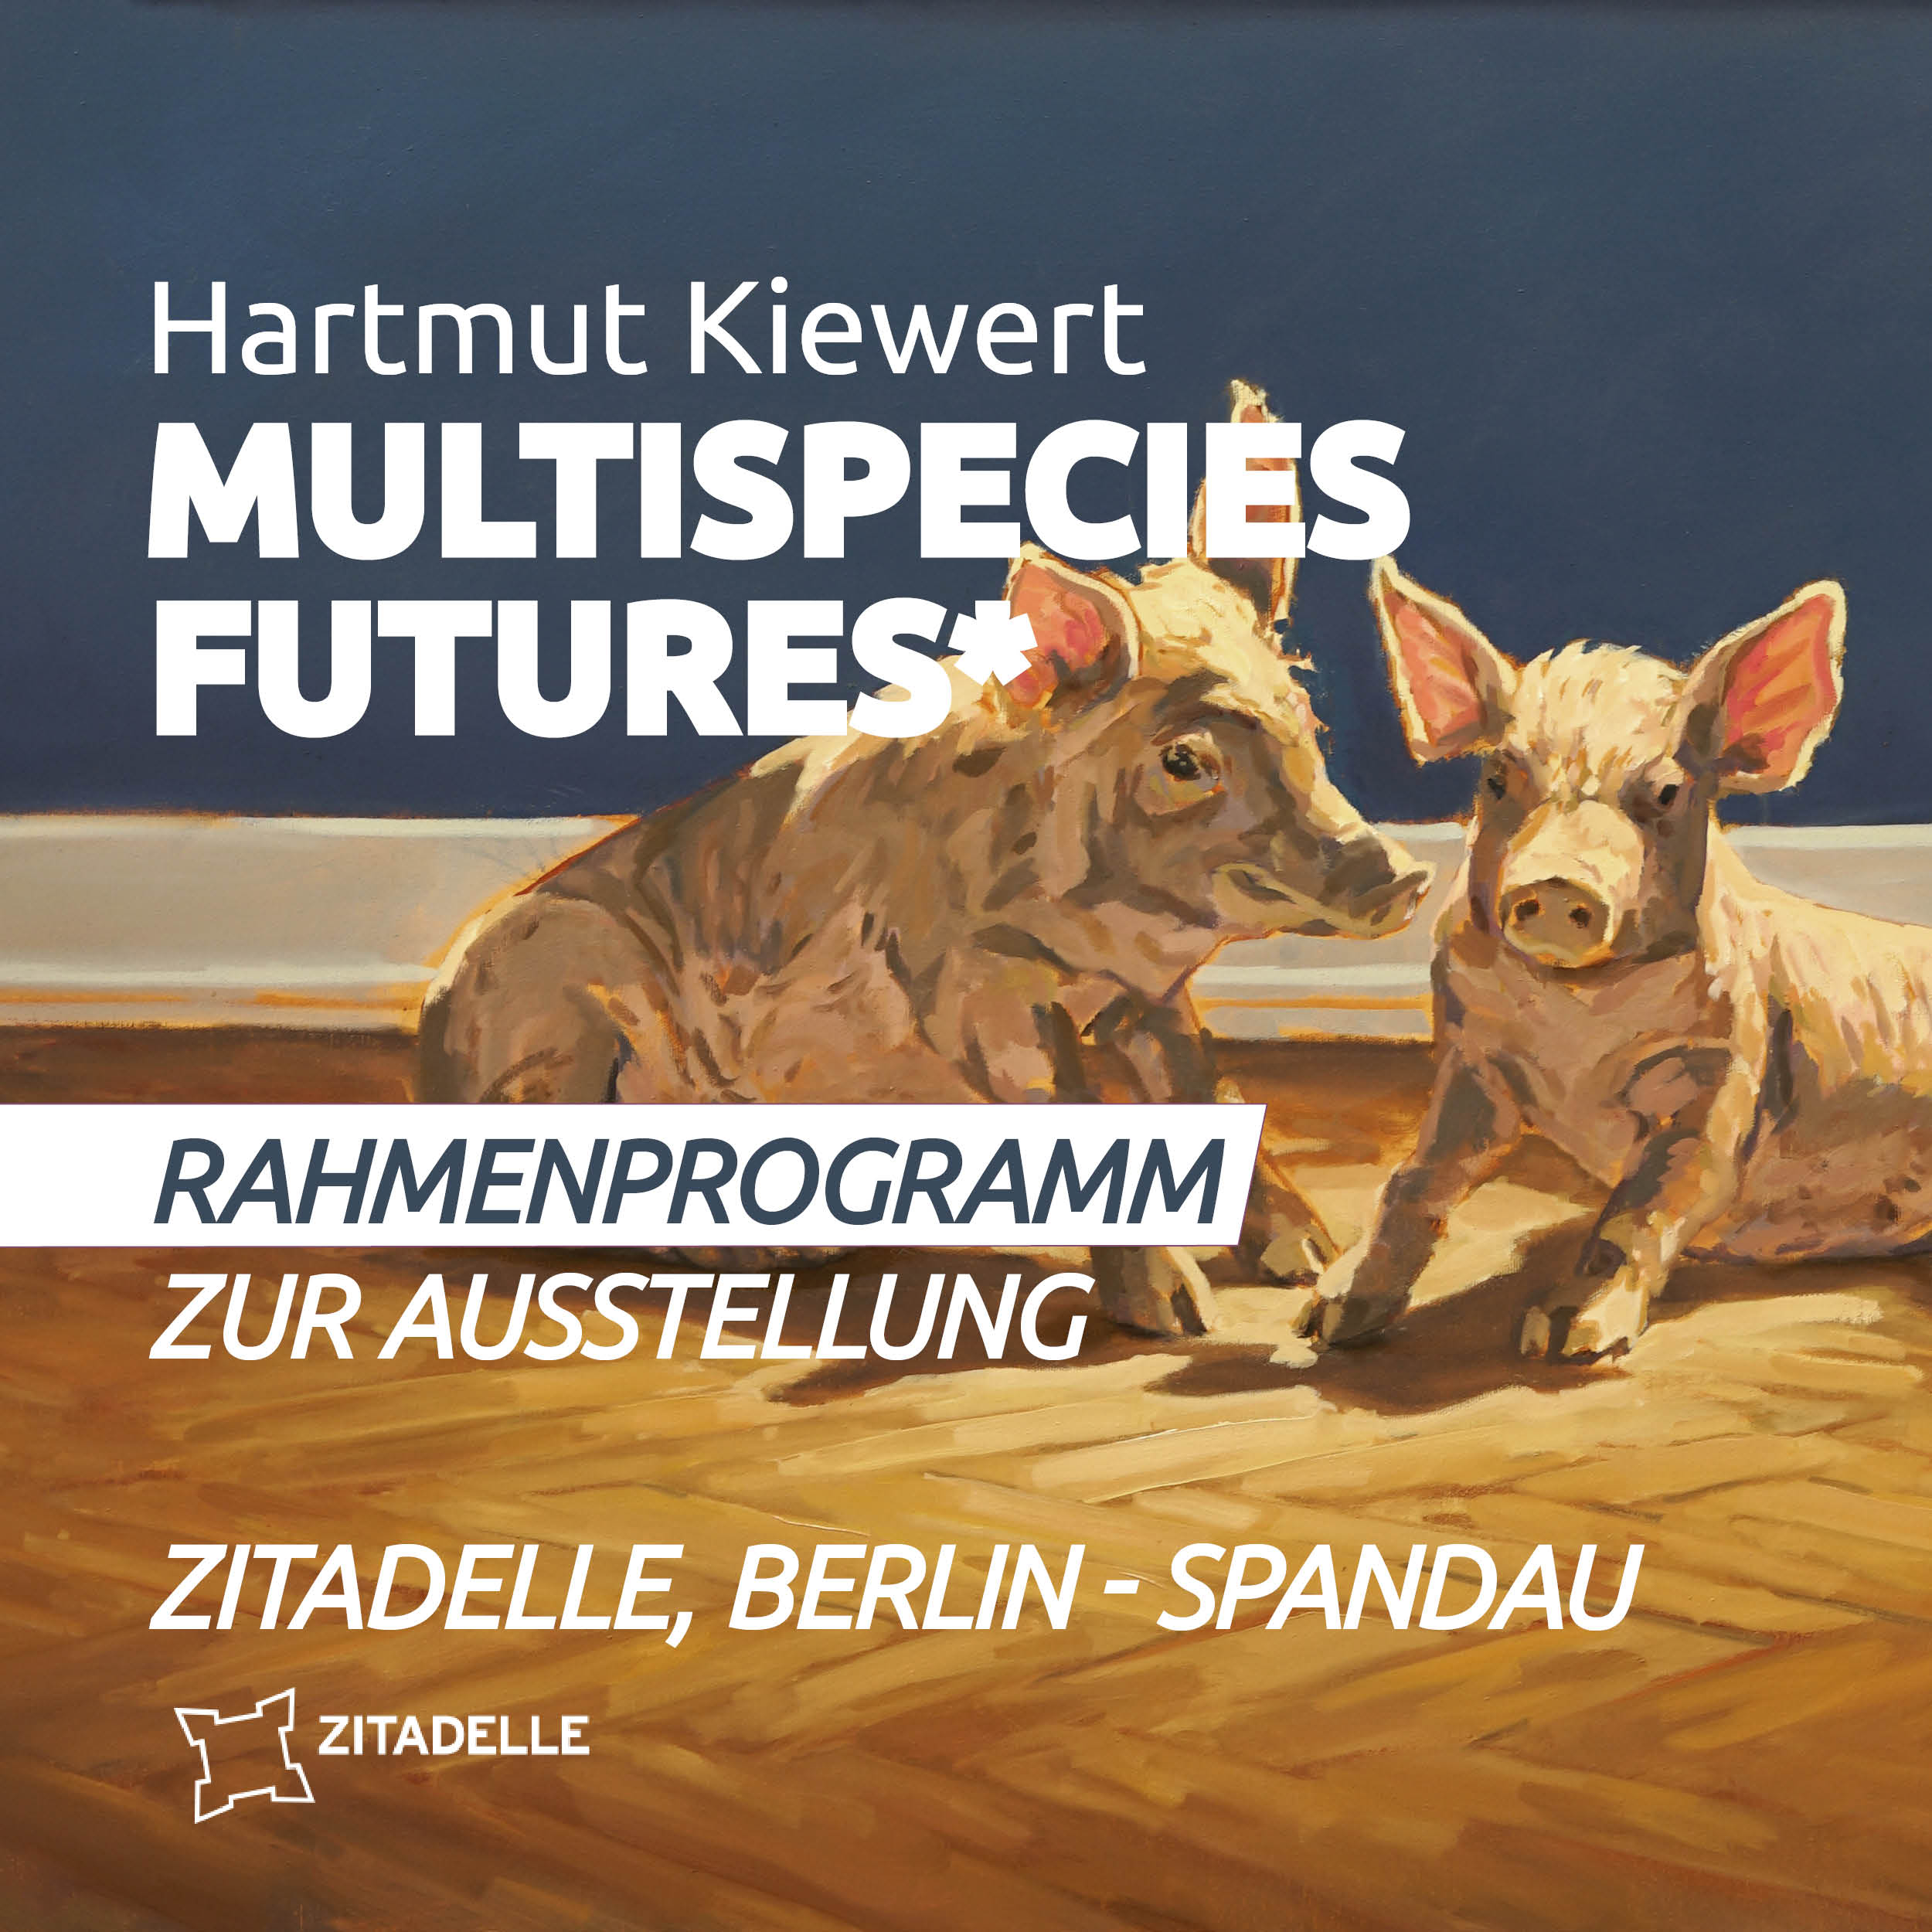 Rahmenprogramm MULTISPECIES FUTURES* / Zitadelle, Berlin